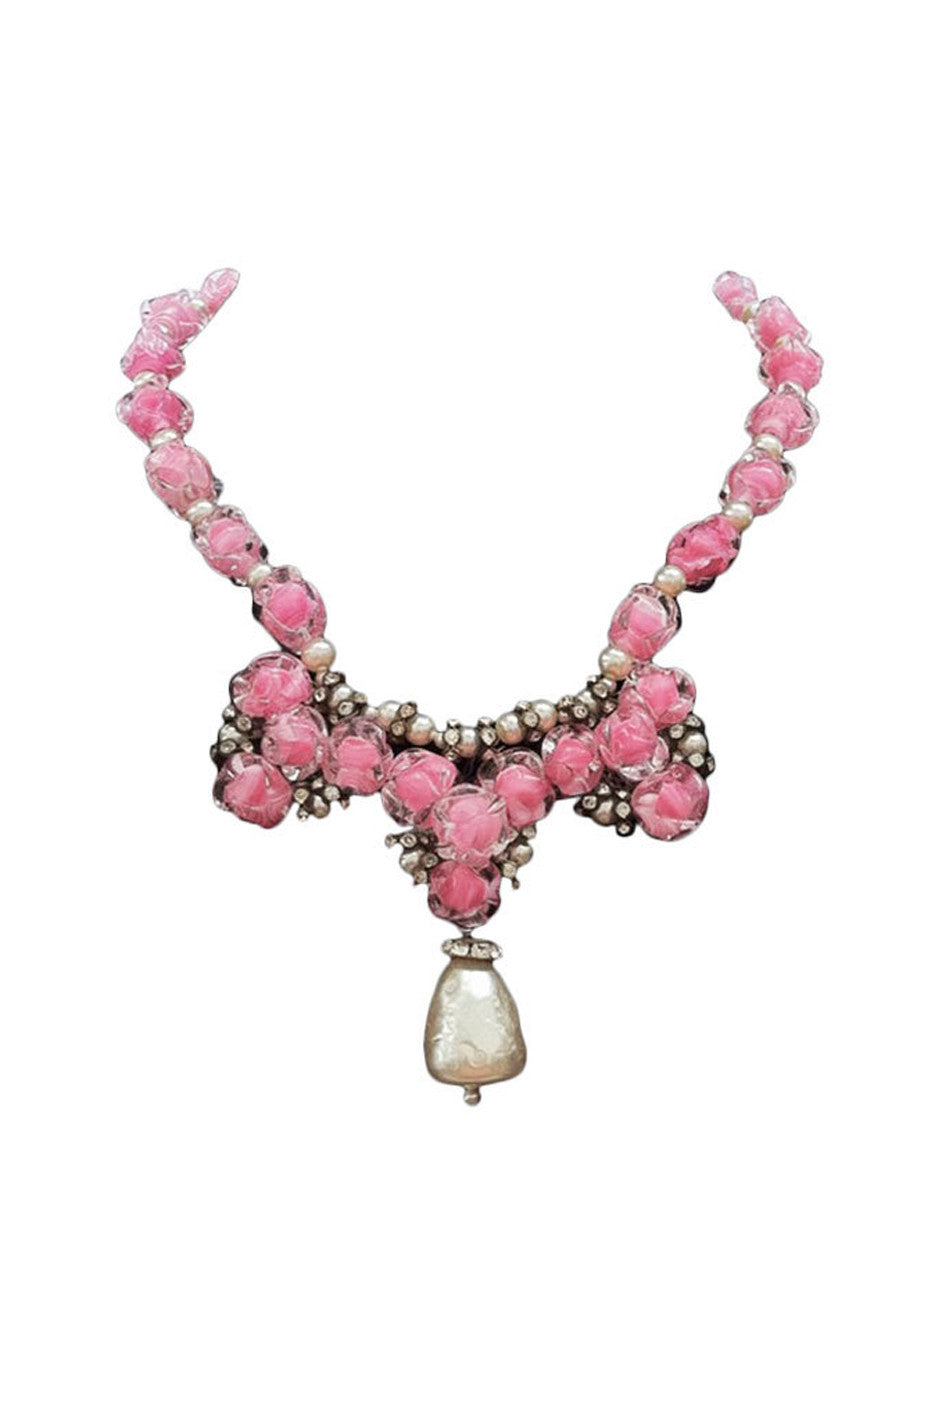 Louis Rousselet Glass Necklace - SOLD - Jewels Past